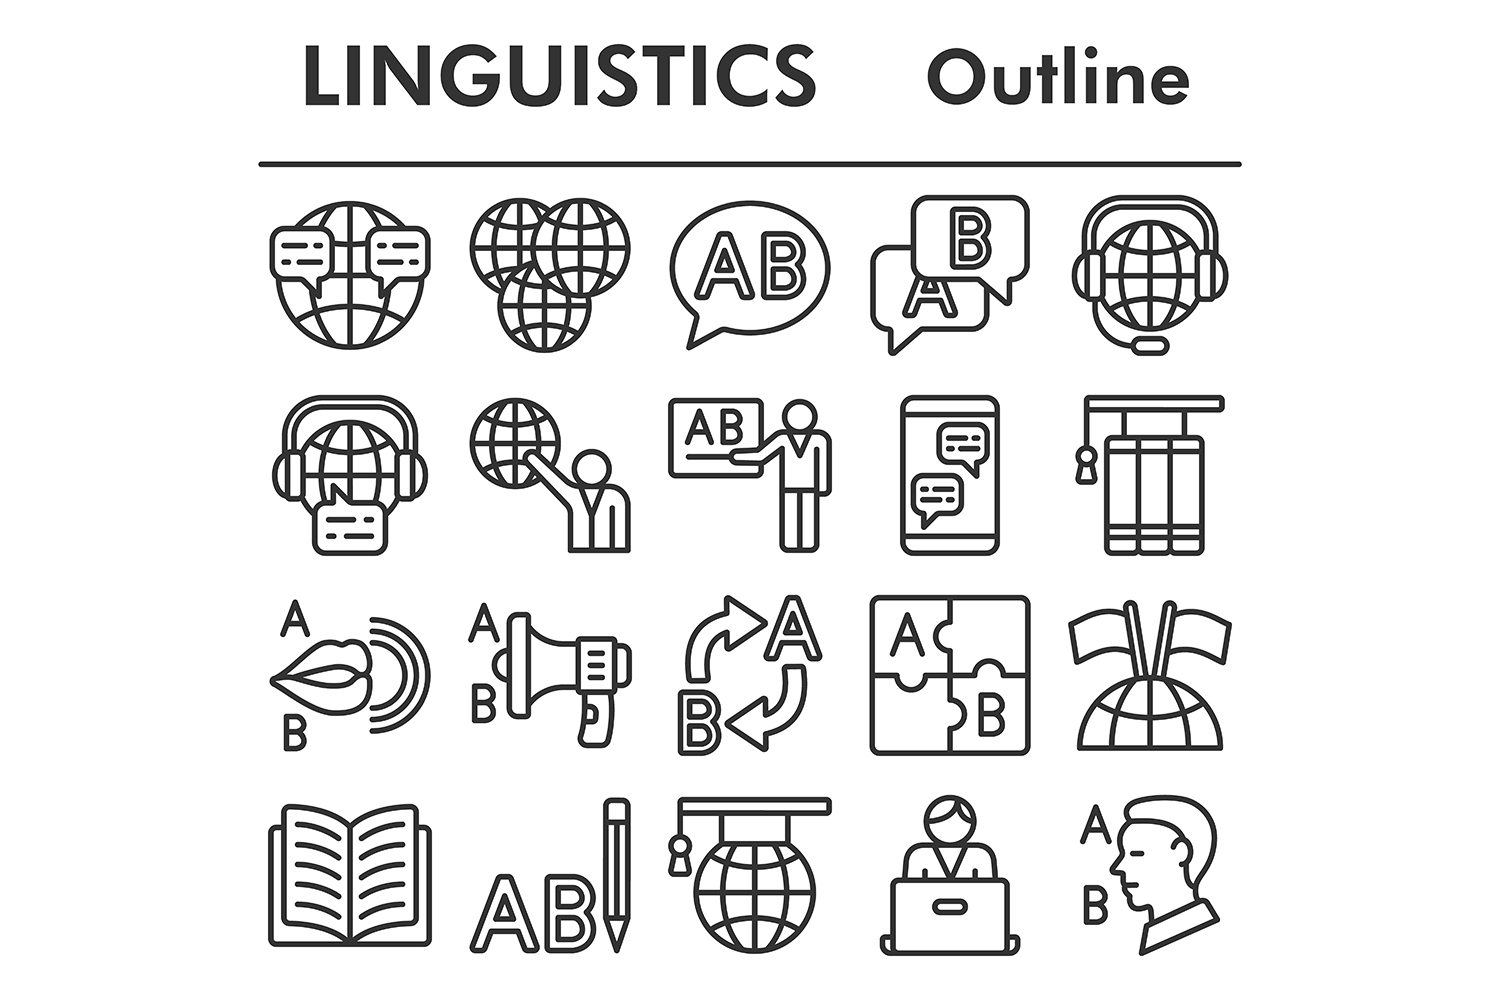 Linguistics icons set, outline style pinterest preview image.